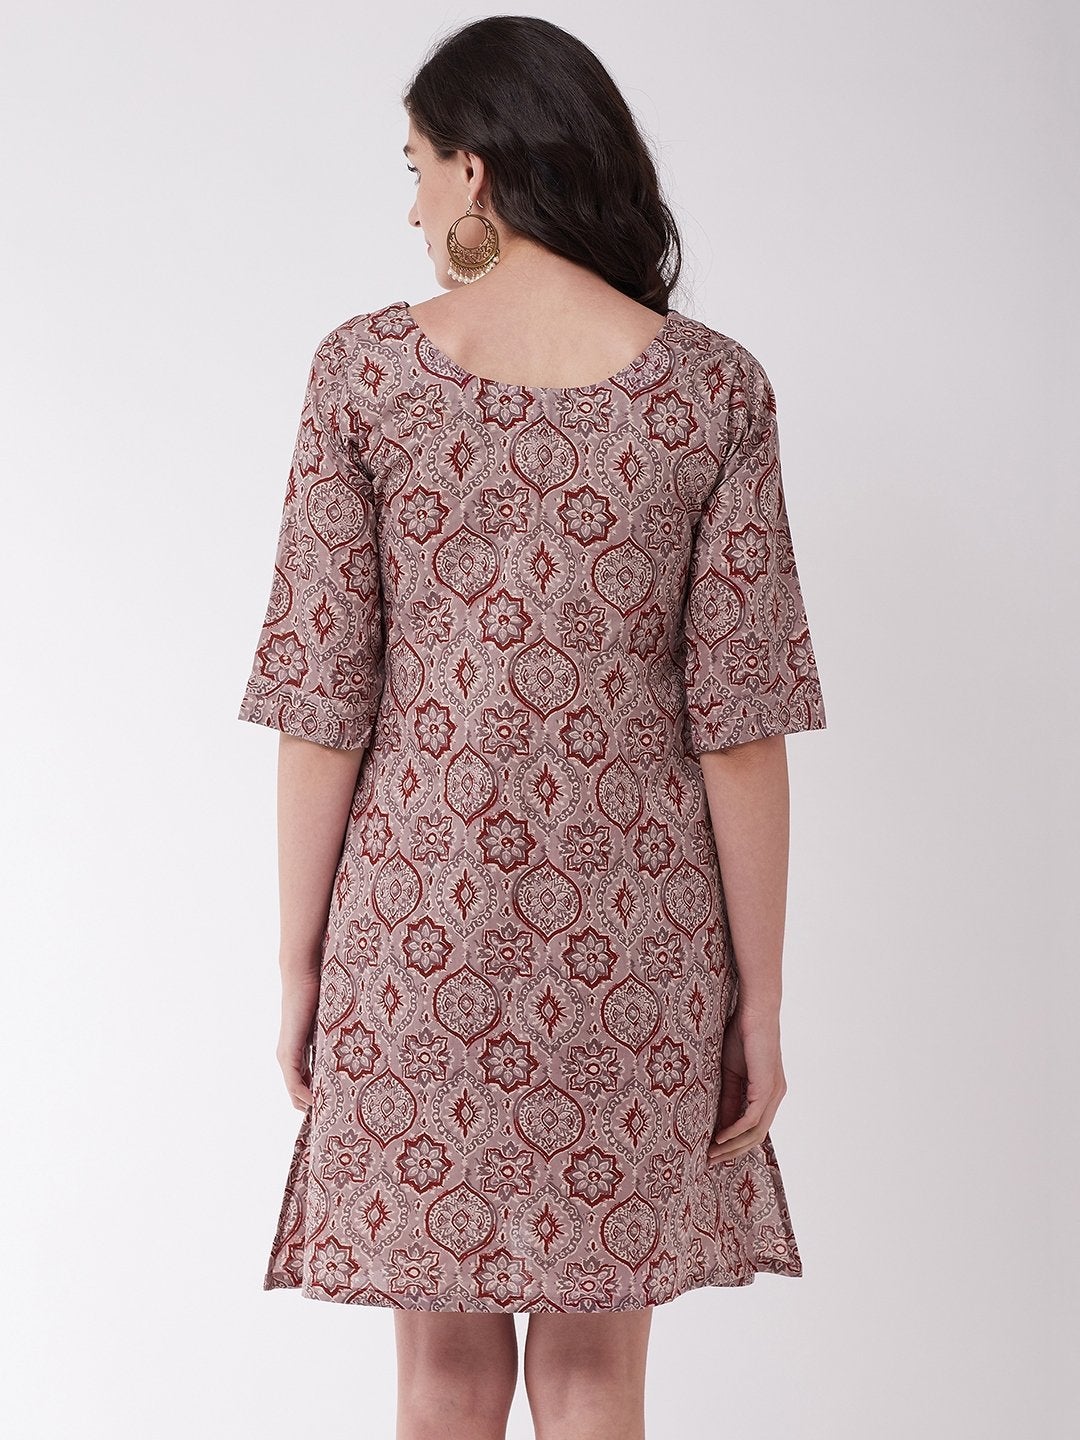 Women's Grey And Maroon Print Dress - InWeave